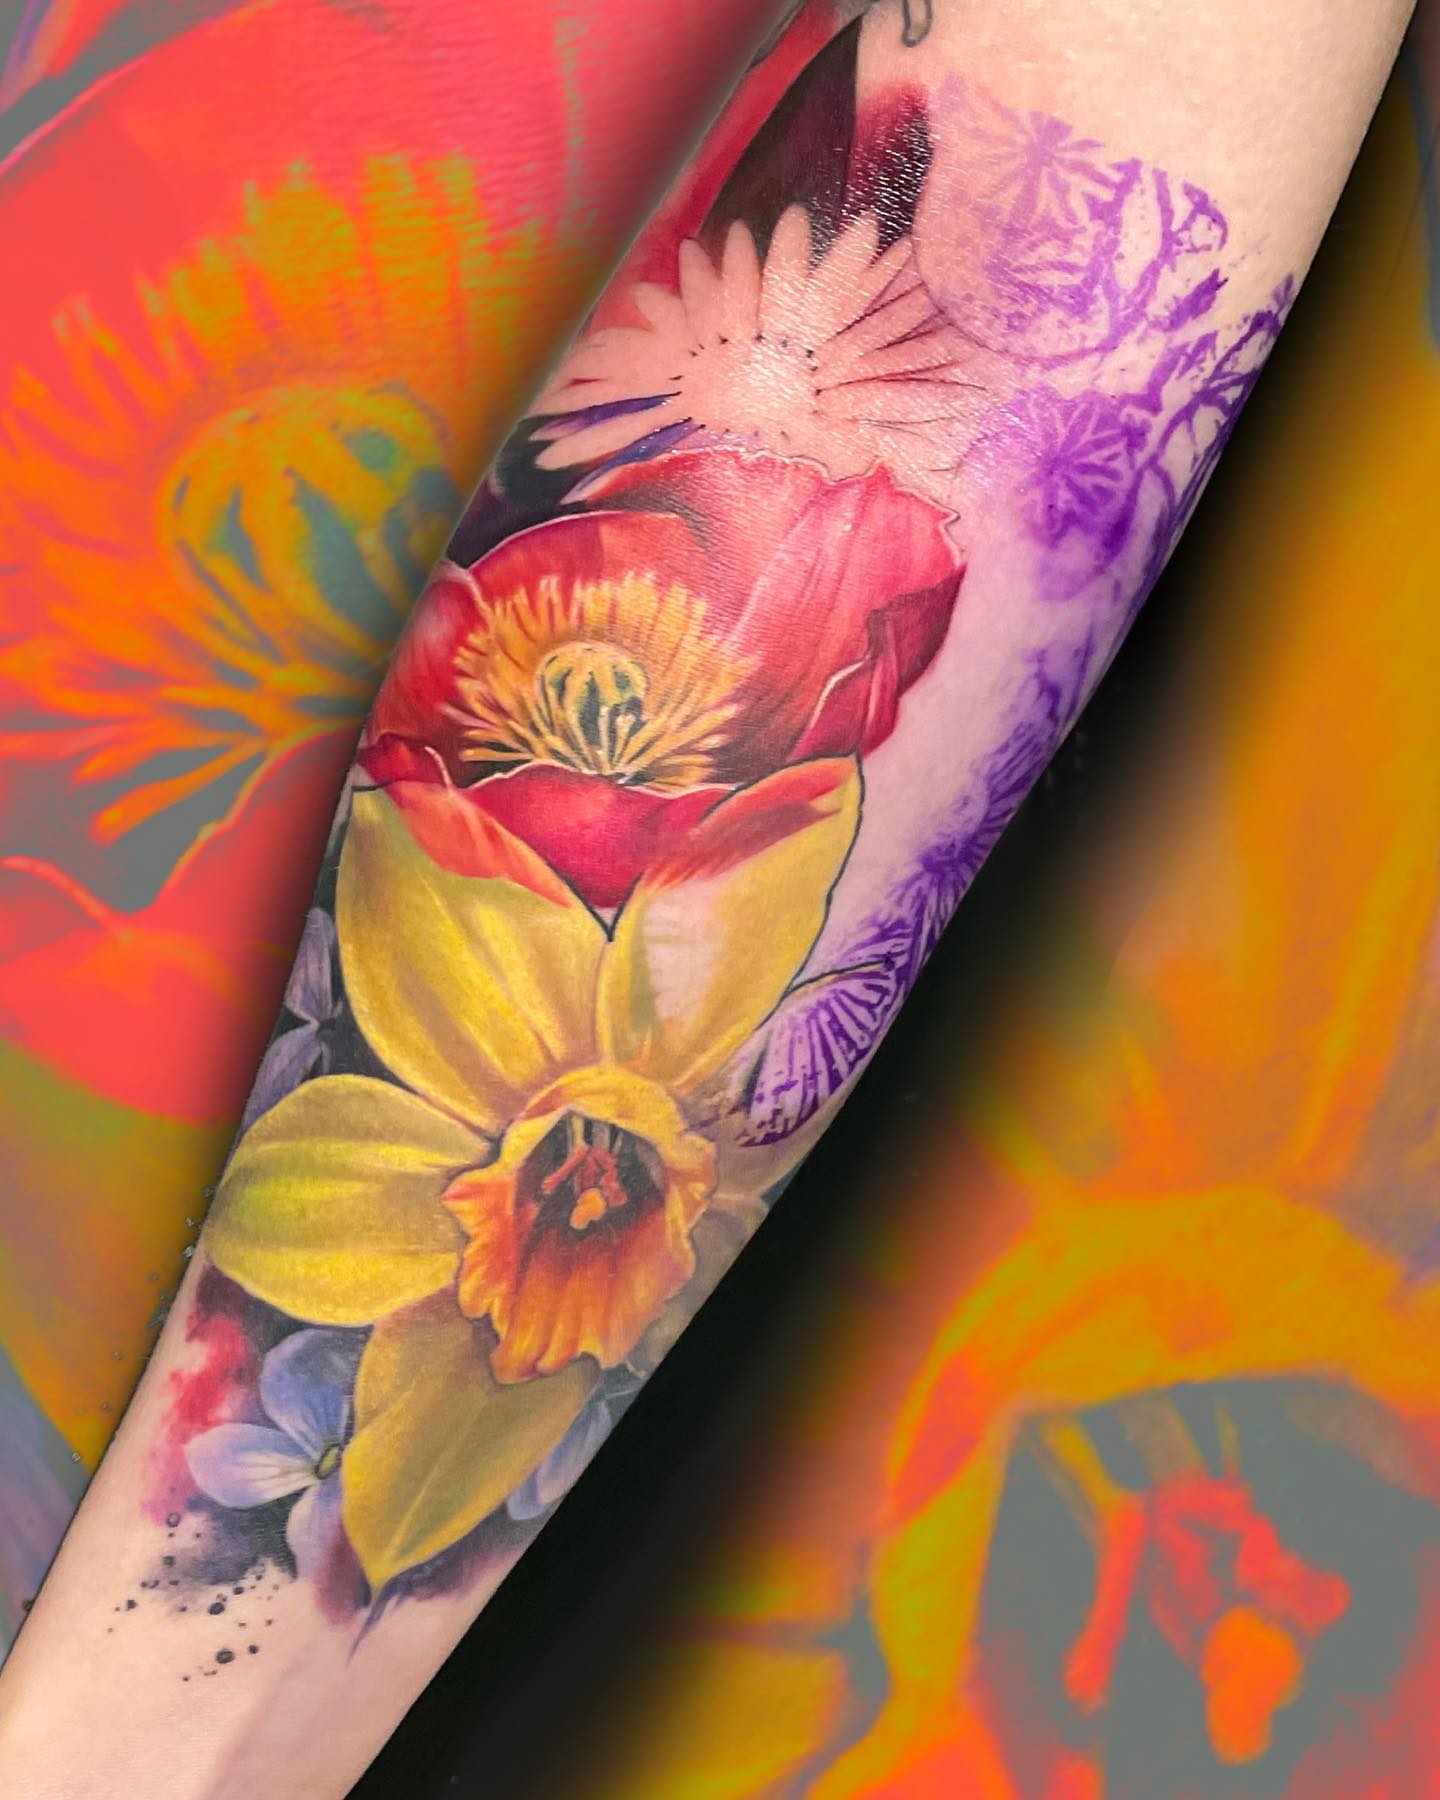 Tatuaje de Narciso vibrante y colorido